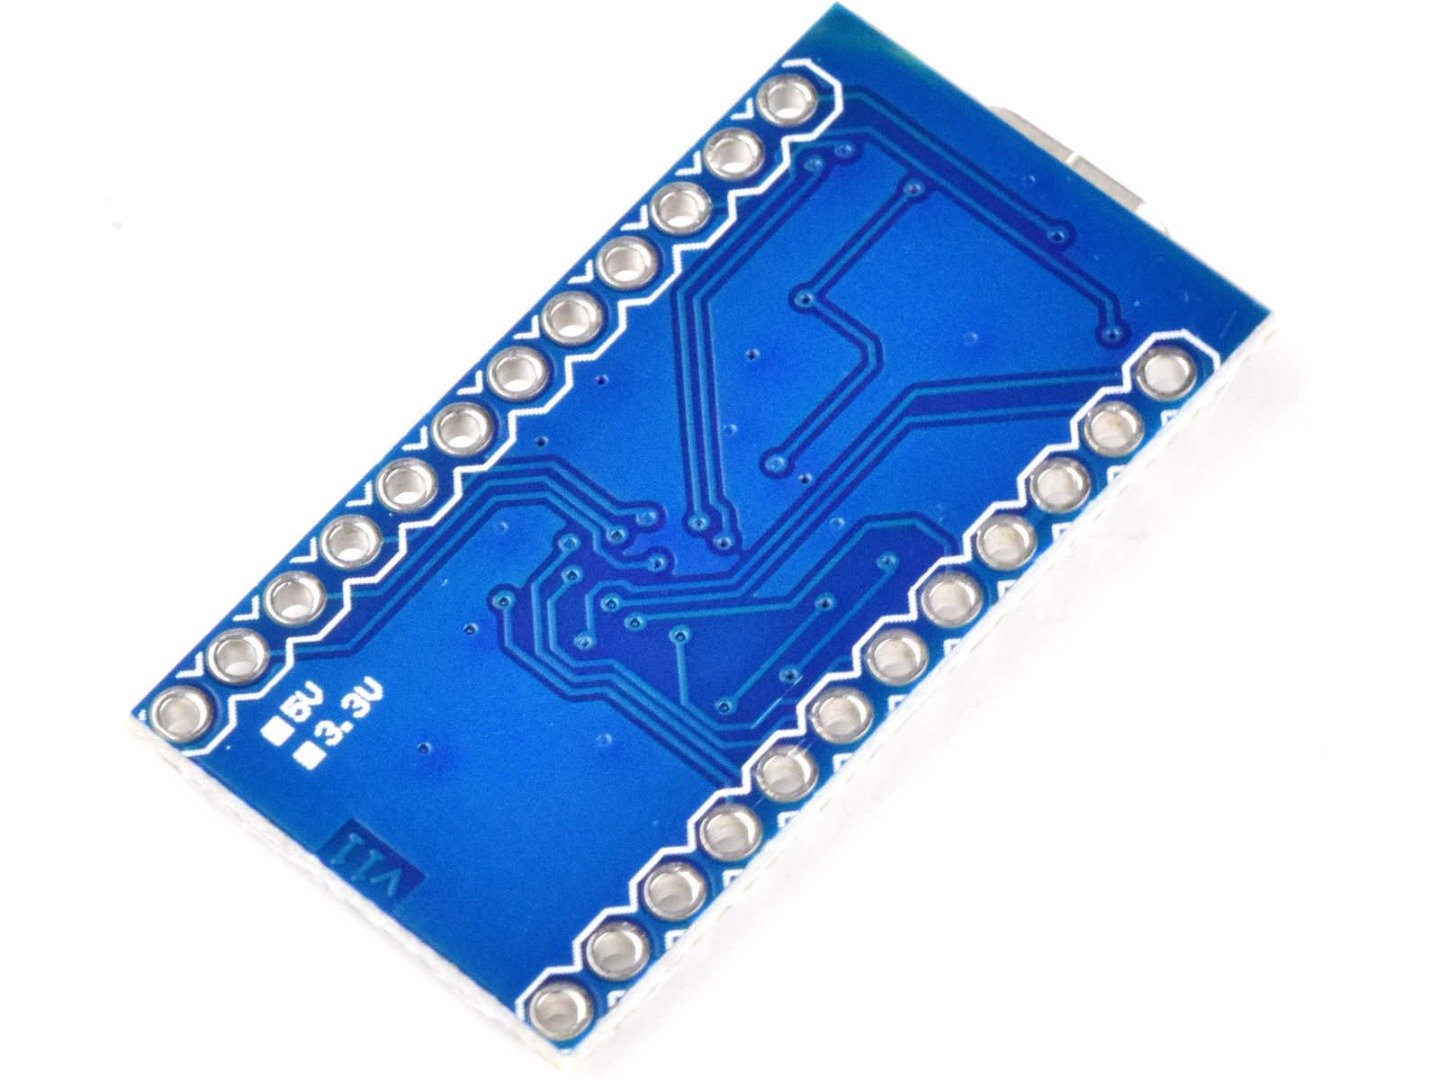 Pro Micro Atmega32u4, USB, 5V, 16MHz, 100% compatible with Arduino 10